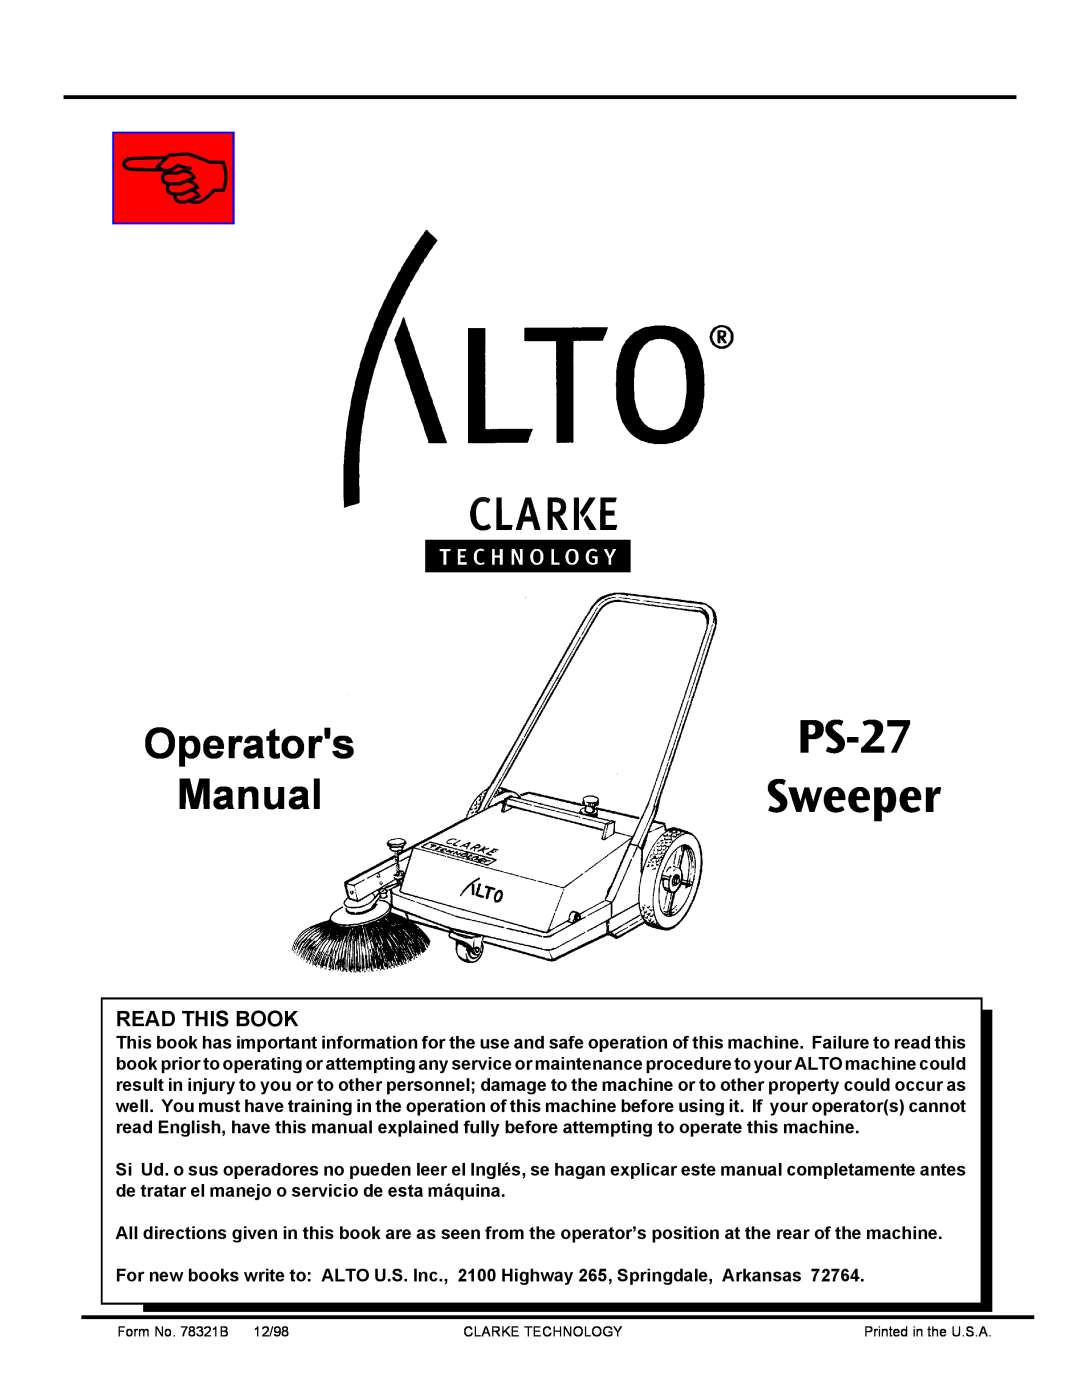 Nilfisk-ALTO Sweeper PS-27 manual Operators Manual, Read This Book, PS-27 Sweeper 